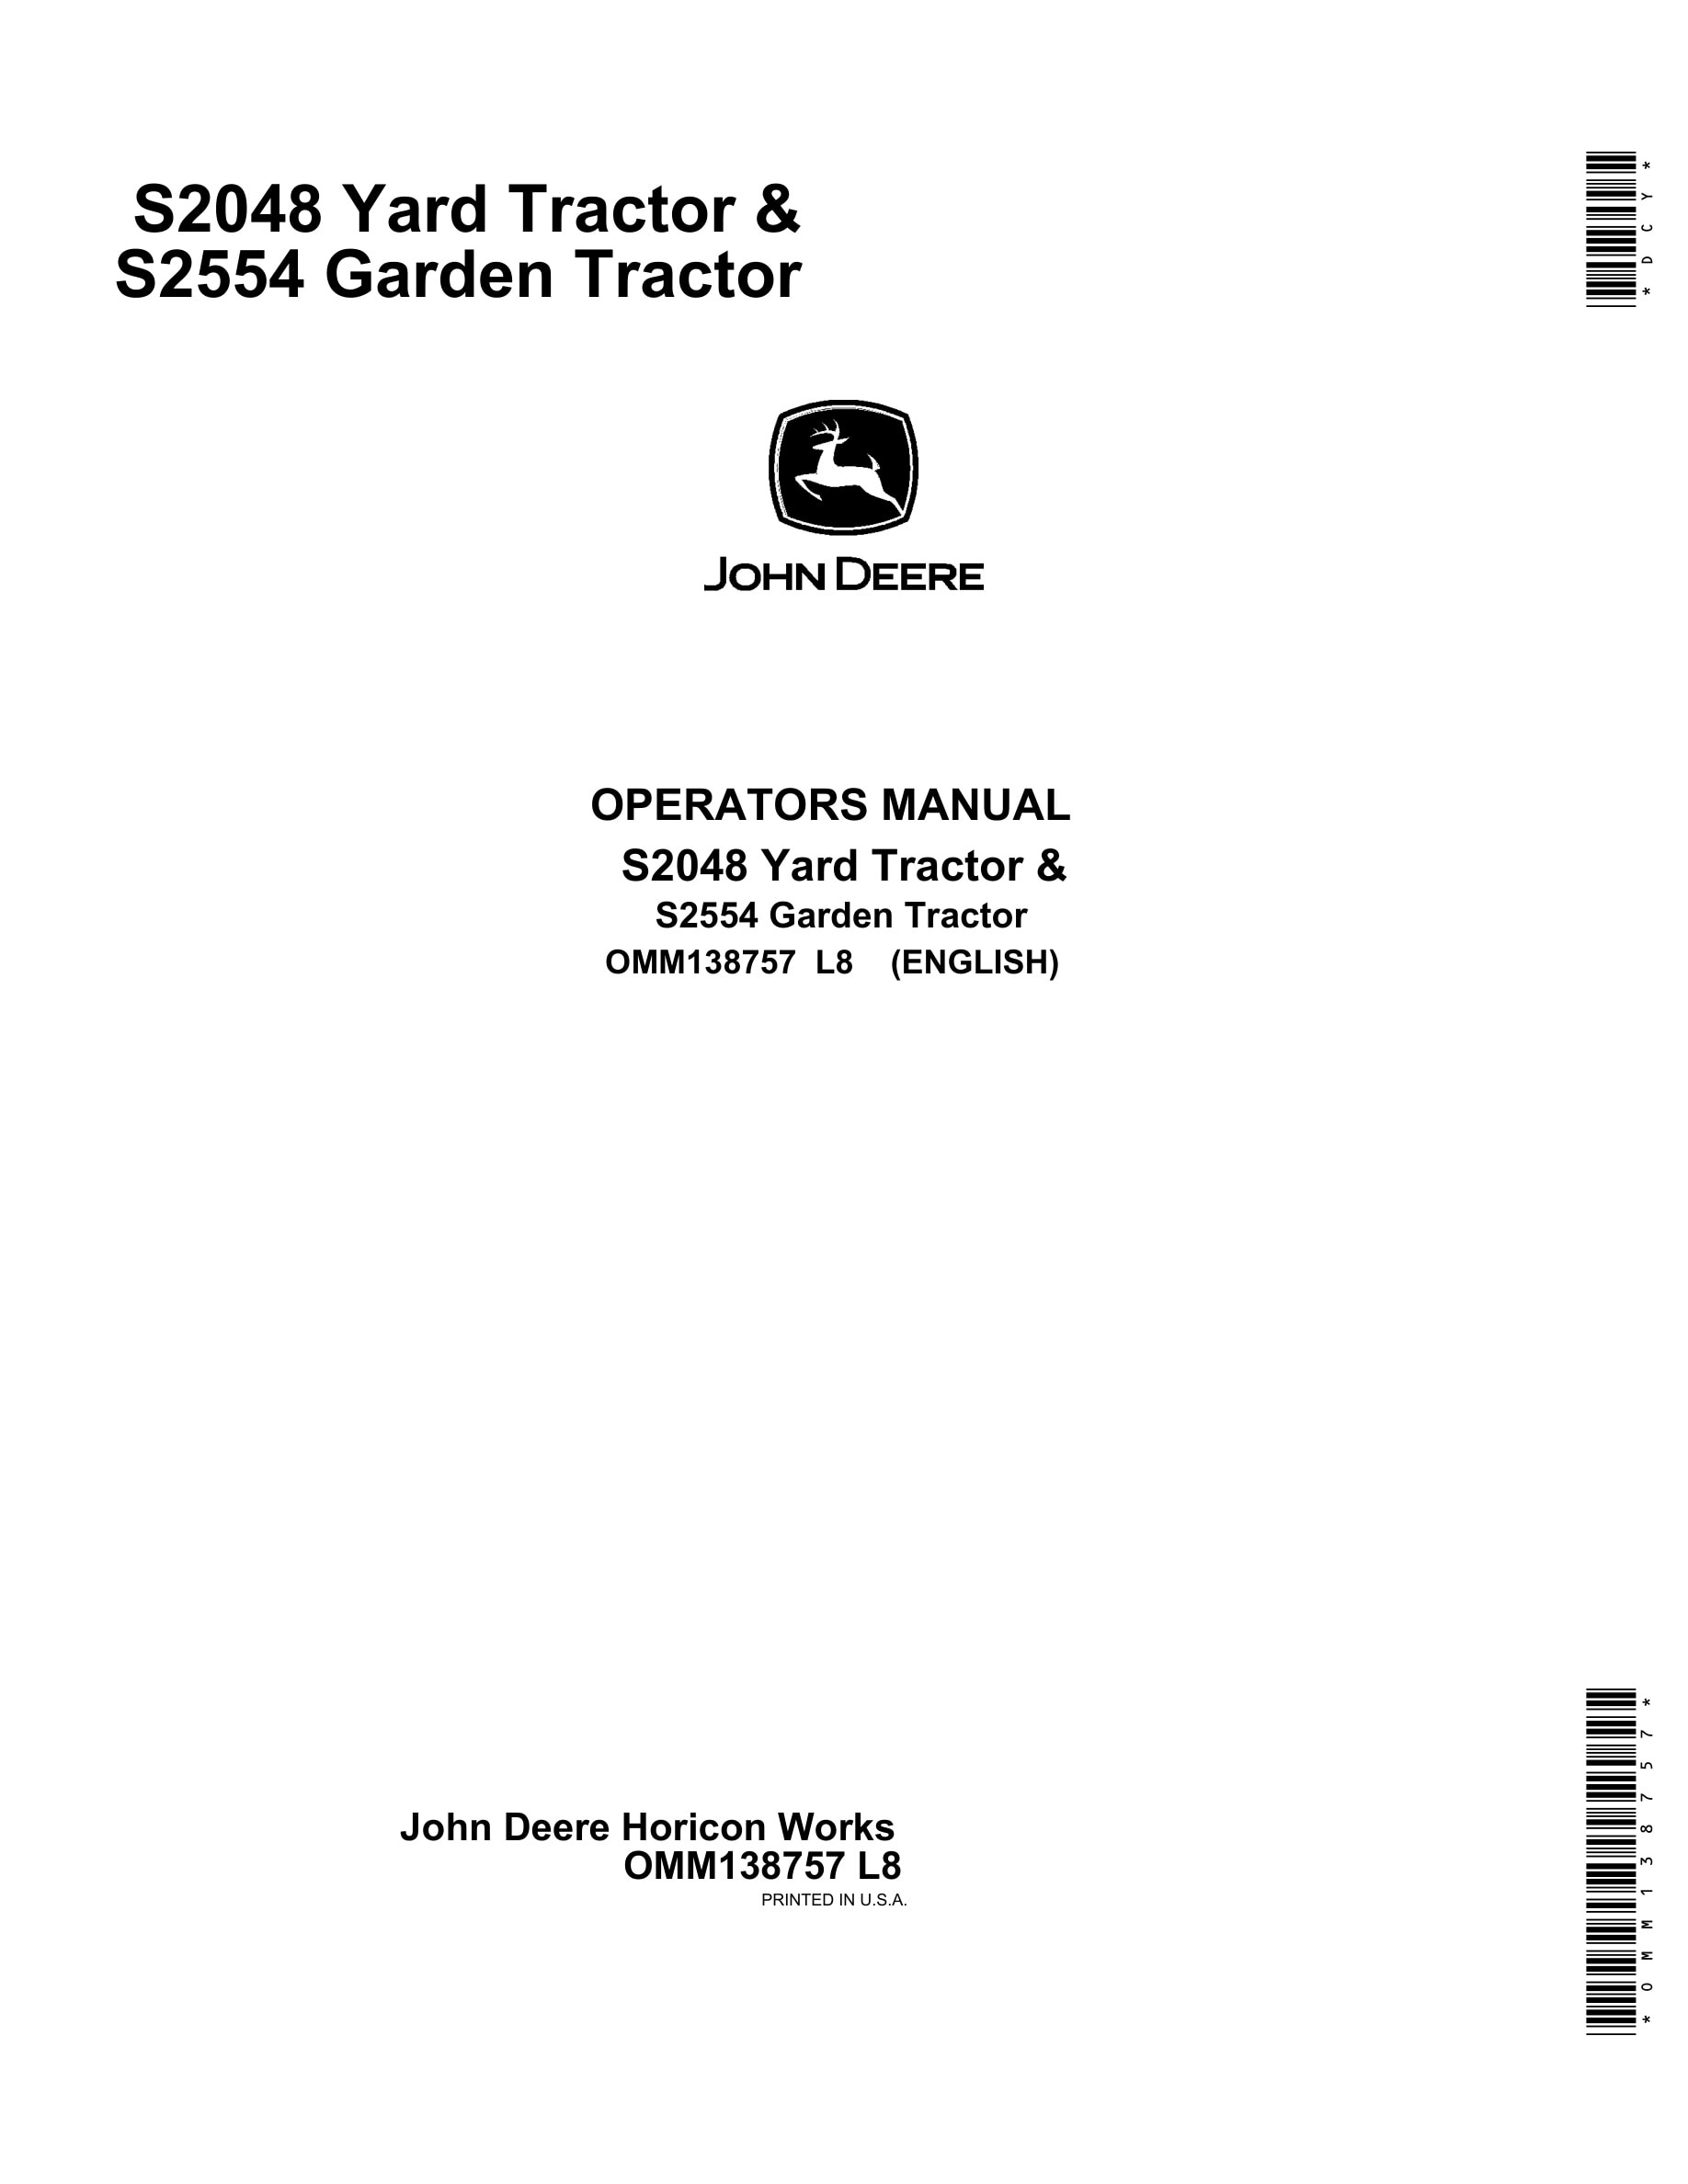 John Deere S2048 S2554 Tractor Operator Manual OMM138757-1